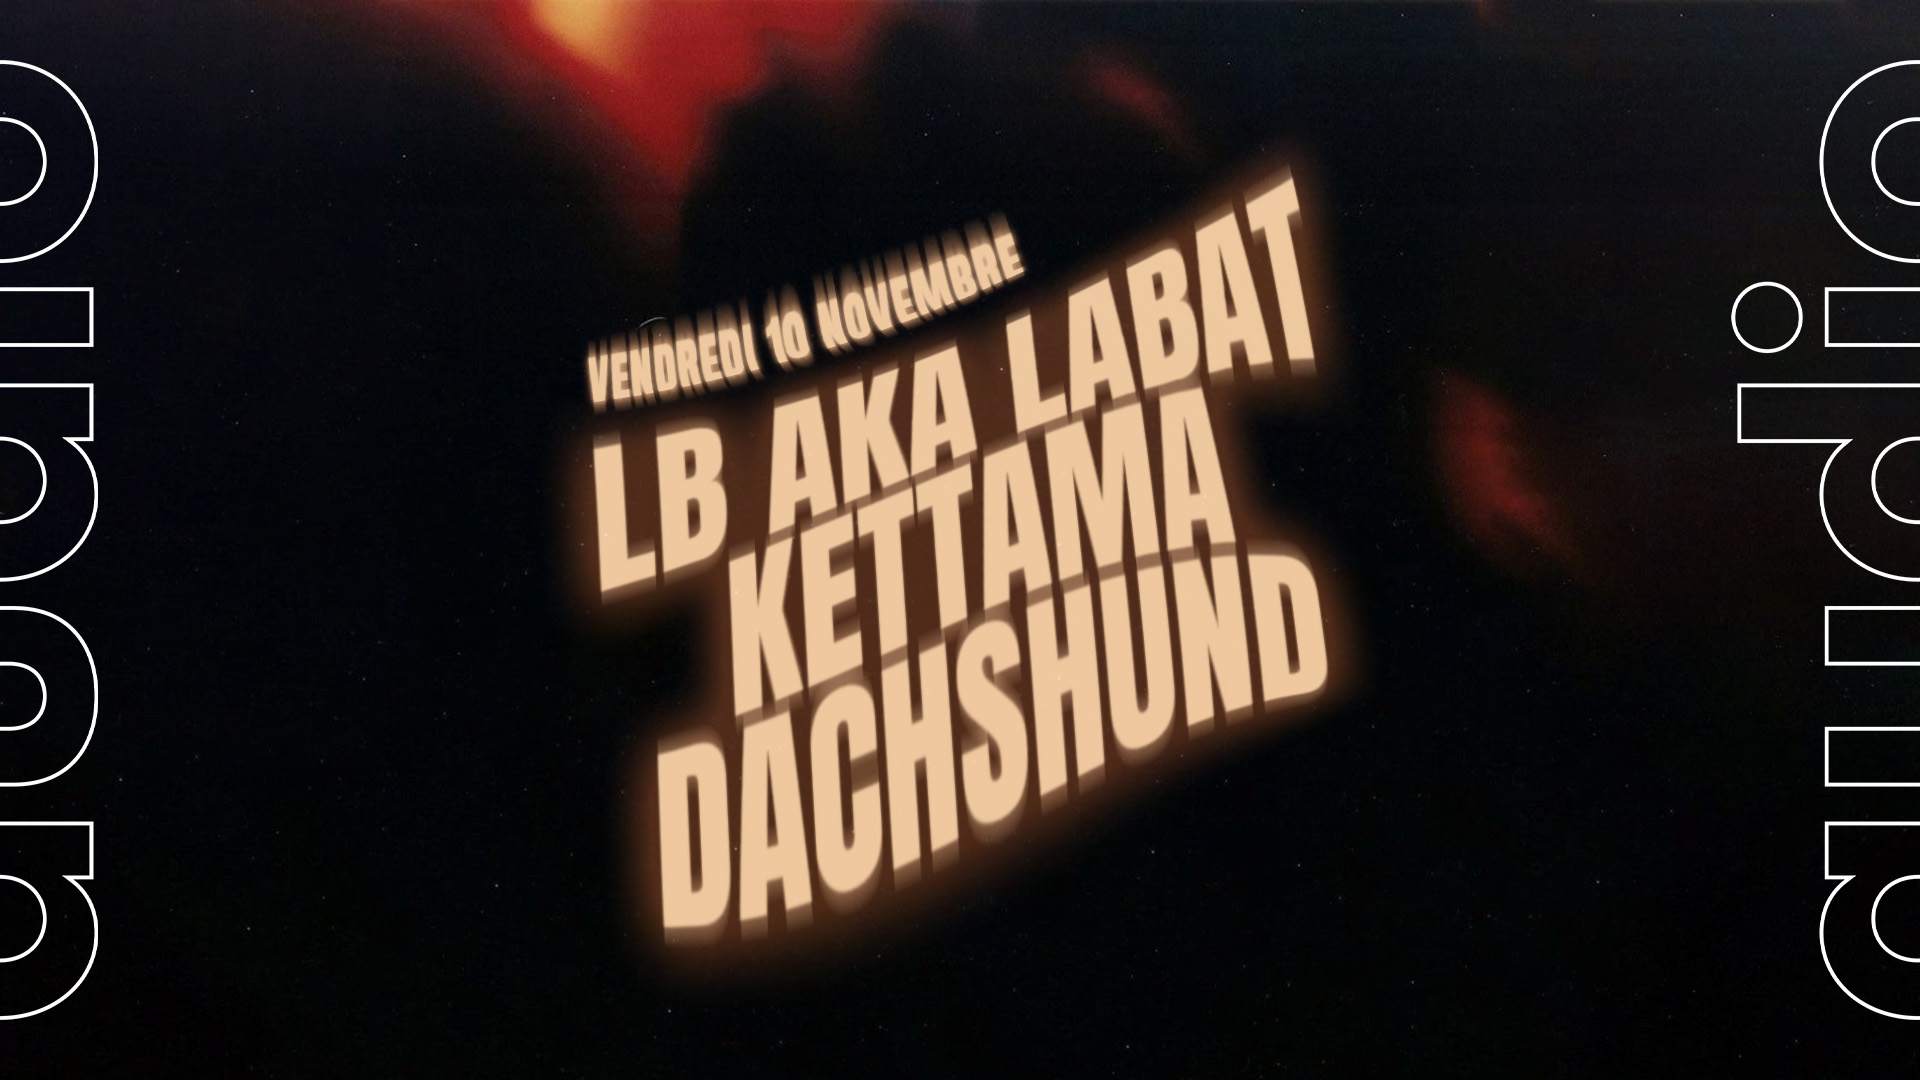 LB aka LABAT · KETTAMA · Dachshund - フライヤー表